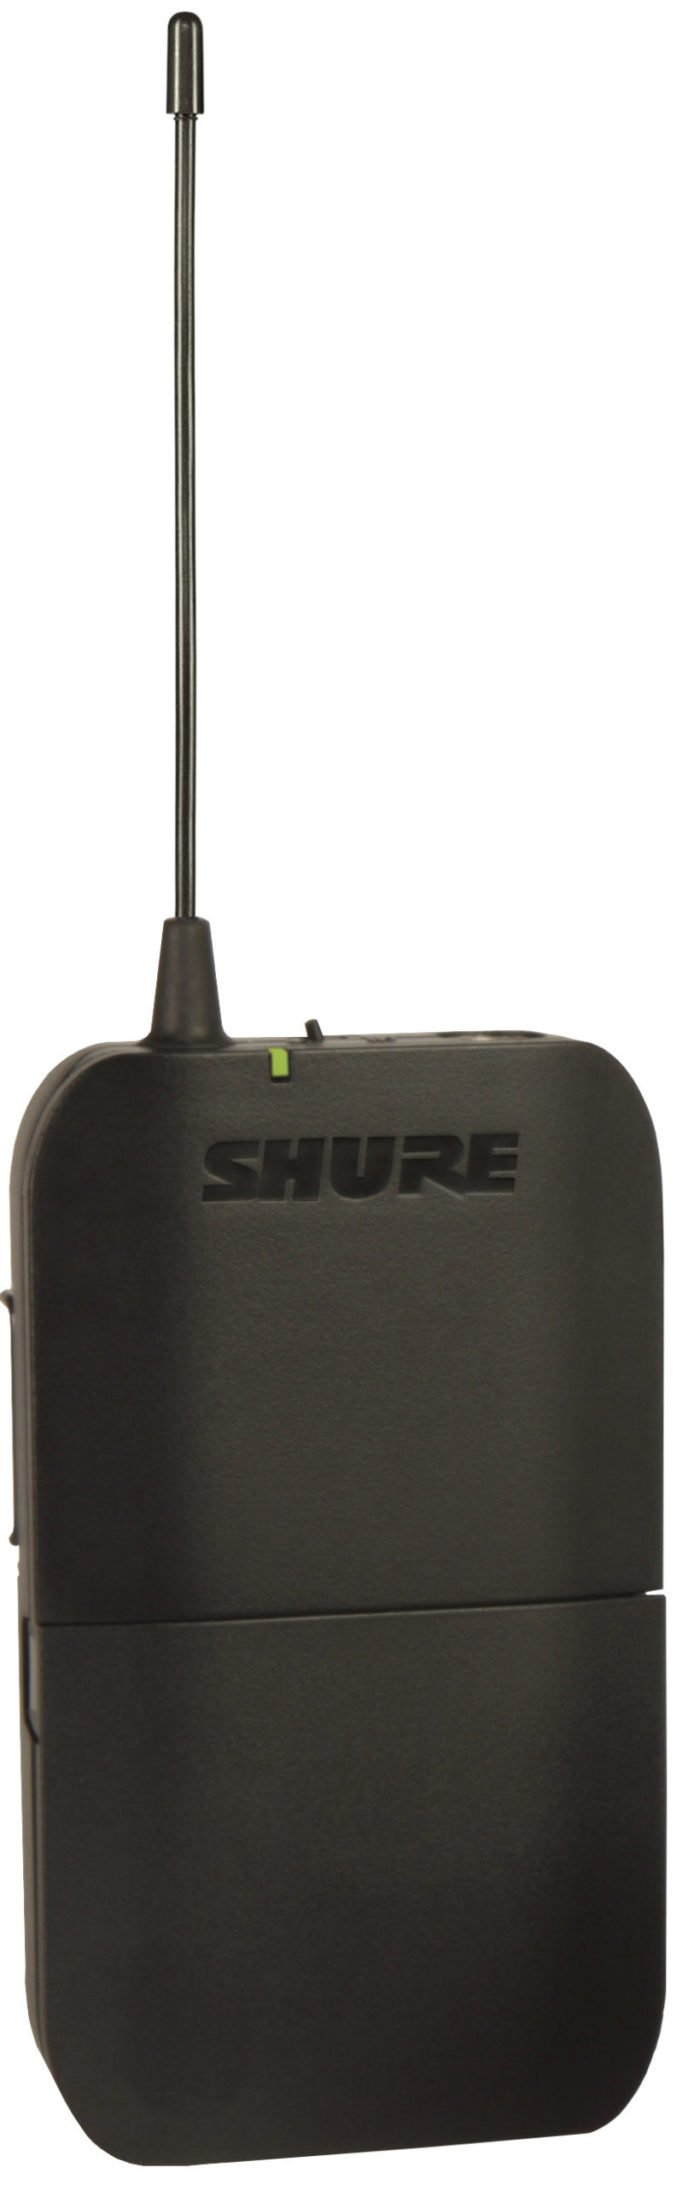 Shure BLX14/P31 Headset S8